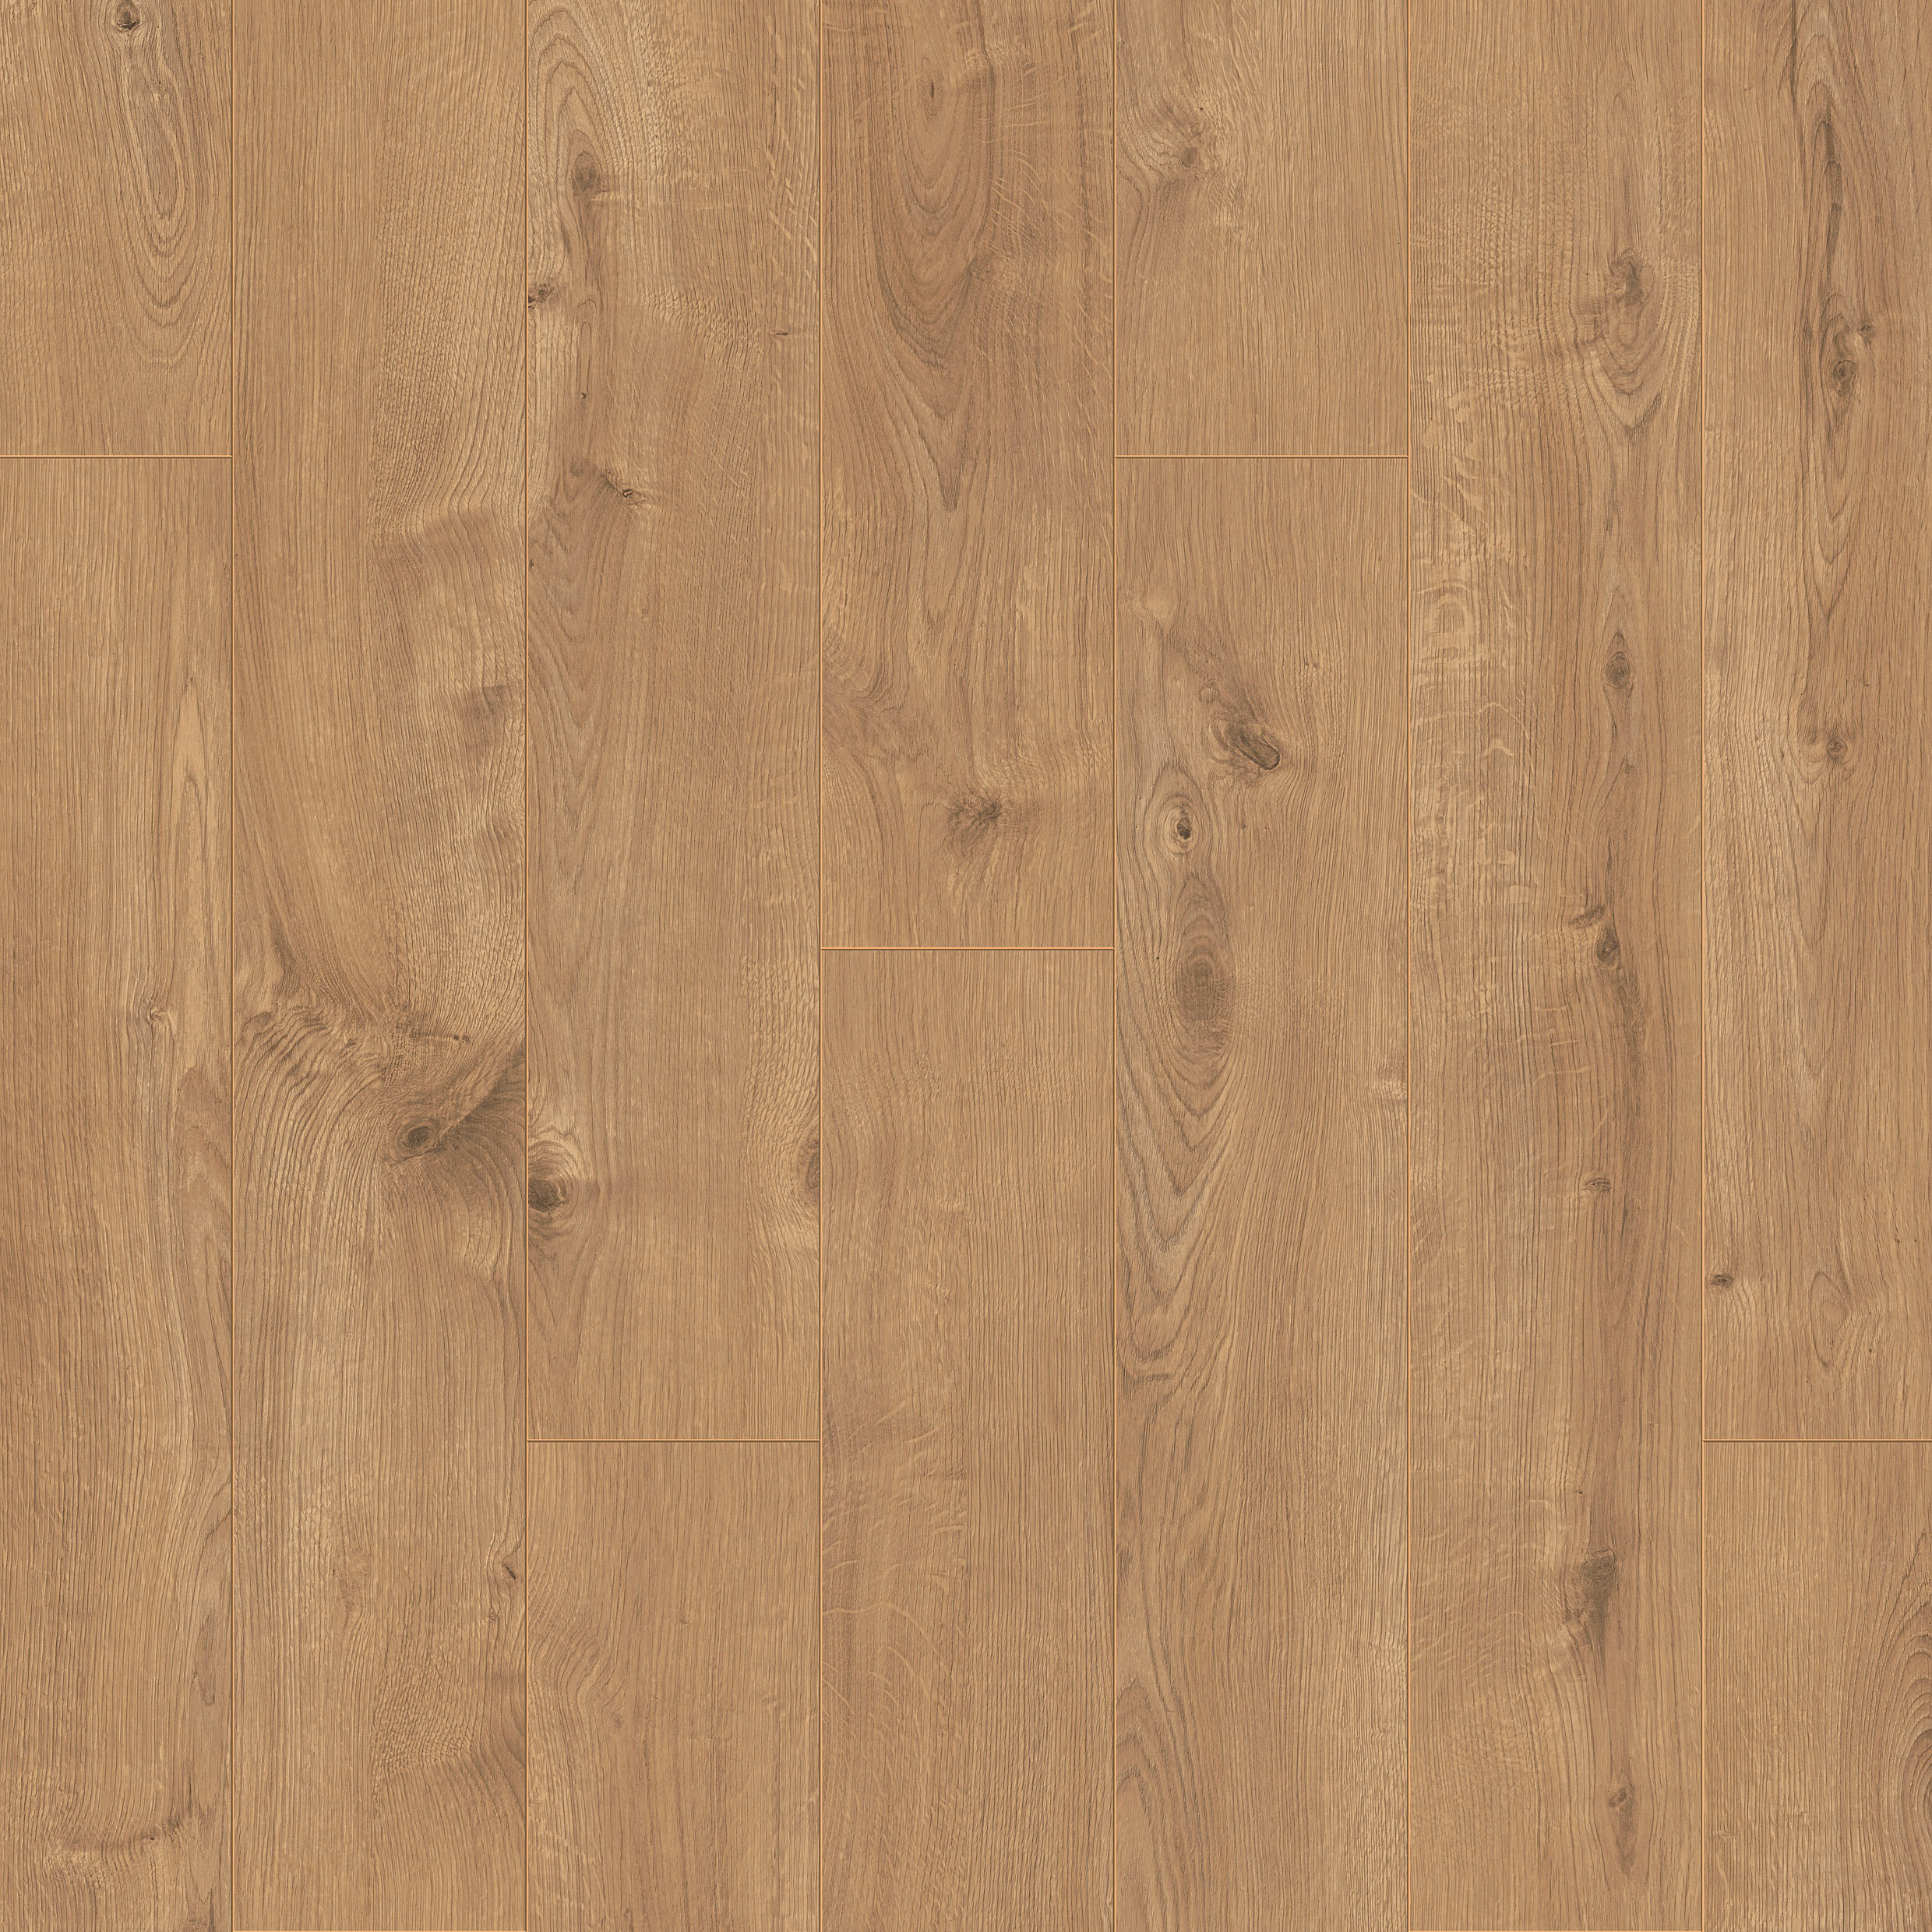 Image of Venezia Light Oak 12mm Laminate Flooring - 1.48m2